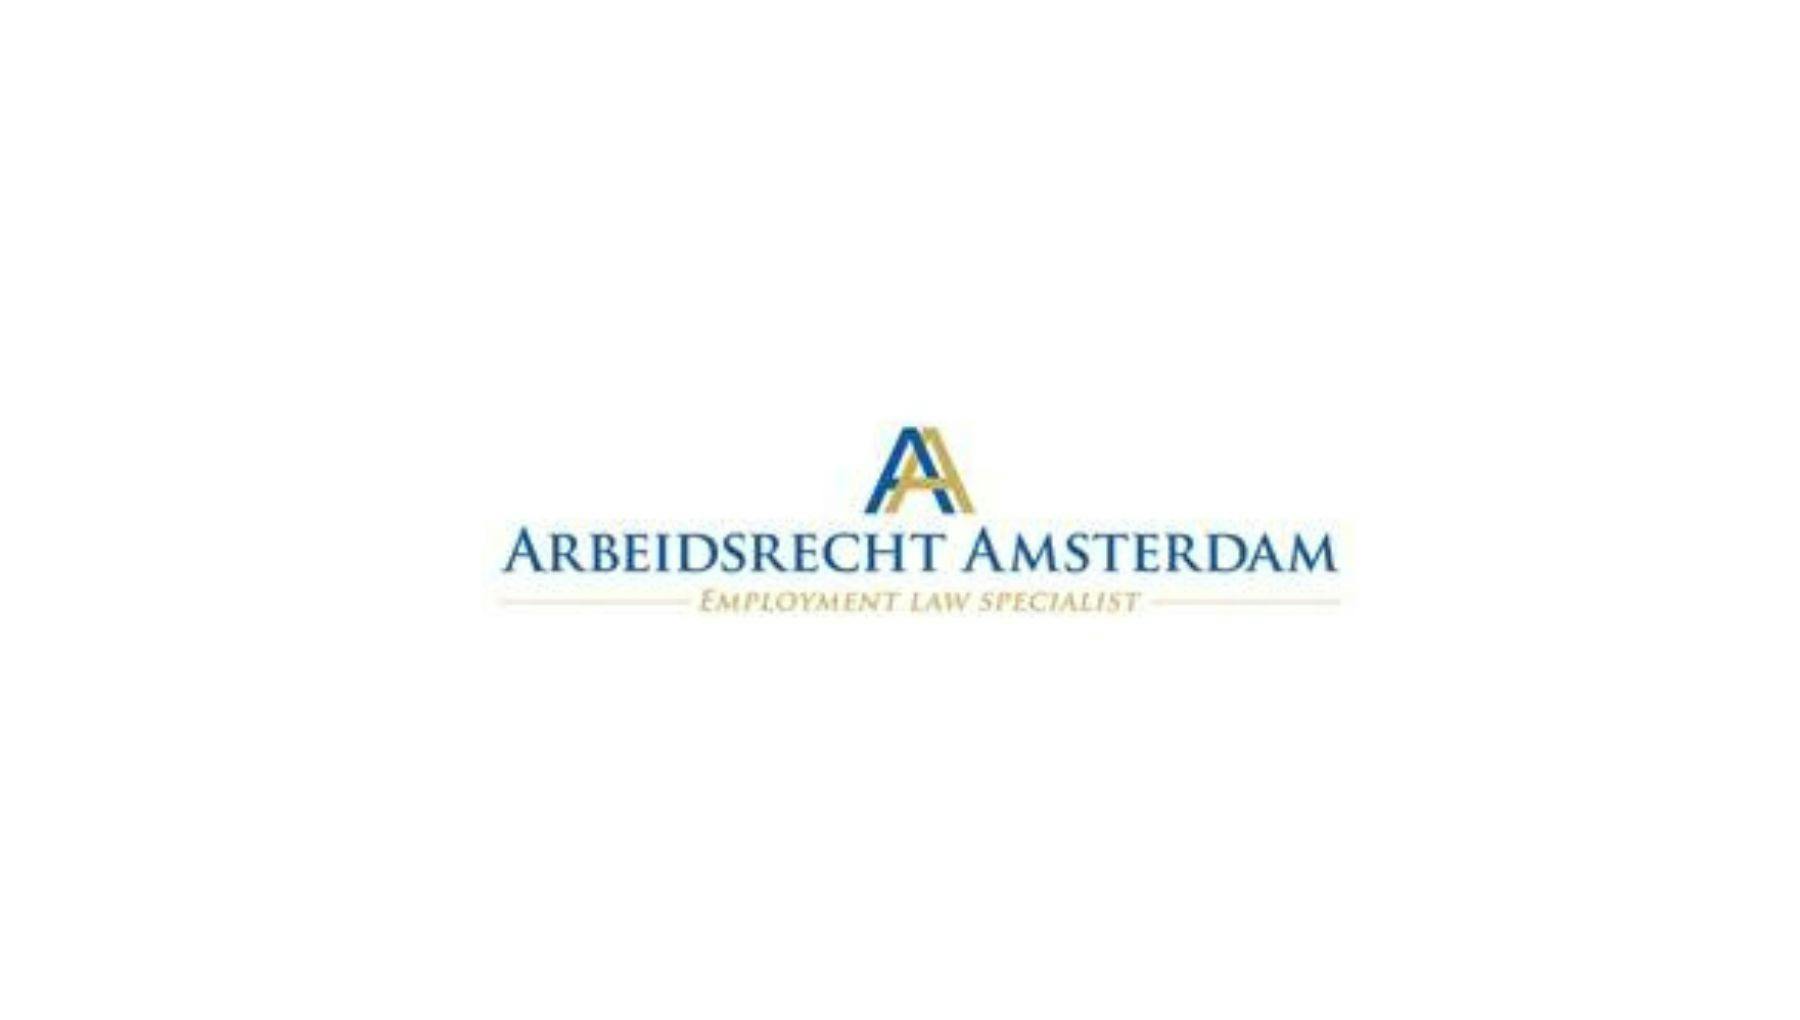 Arbeidsrecht Amsterdam | Employment Law Specialist